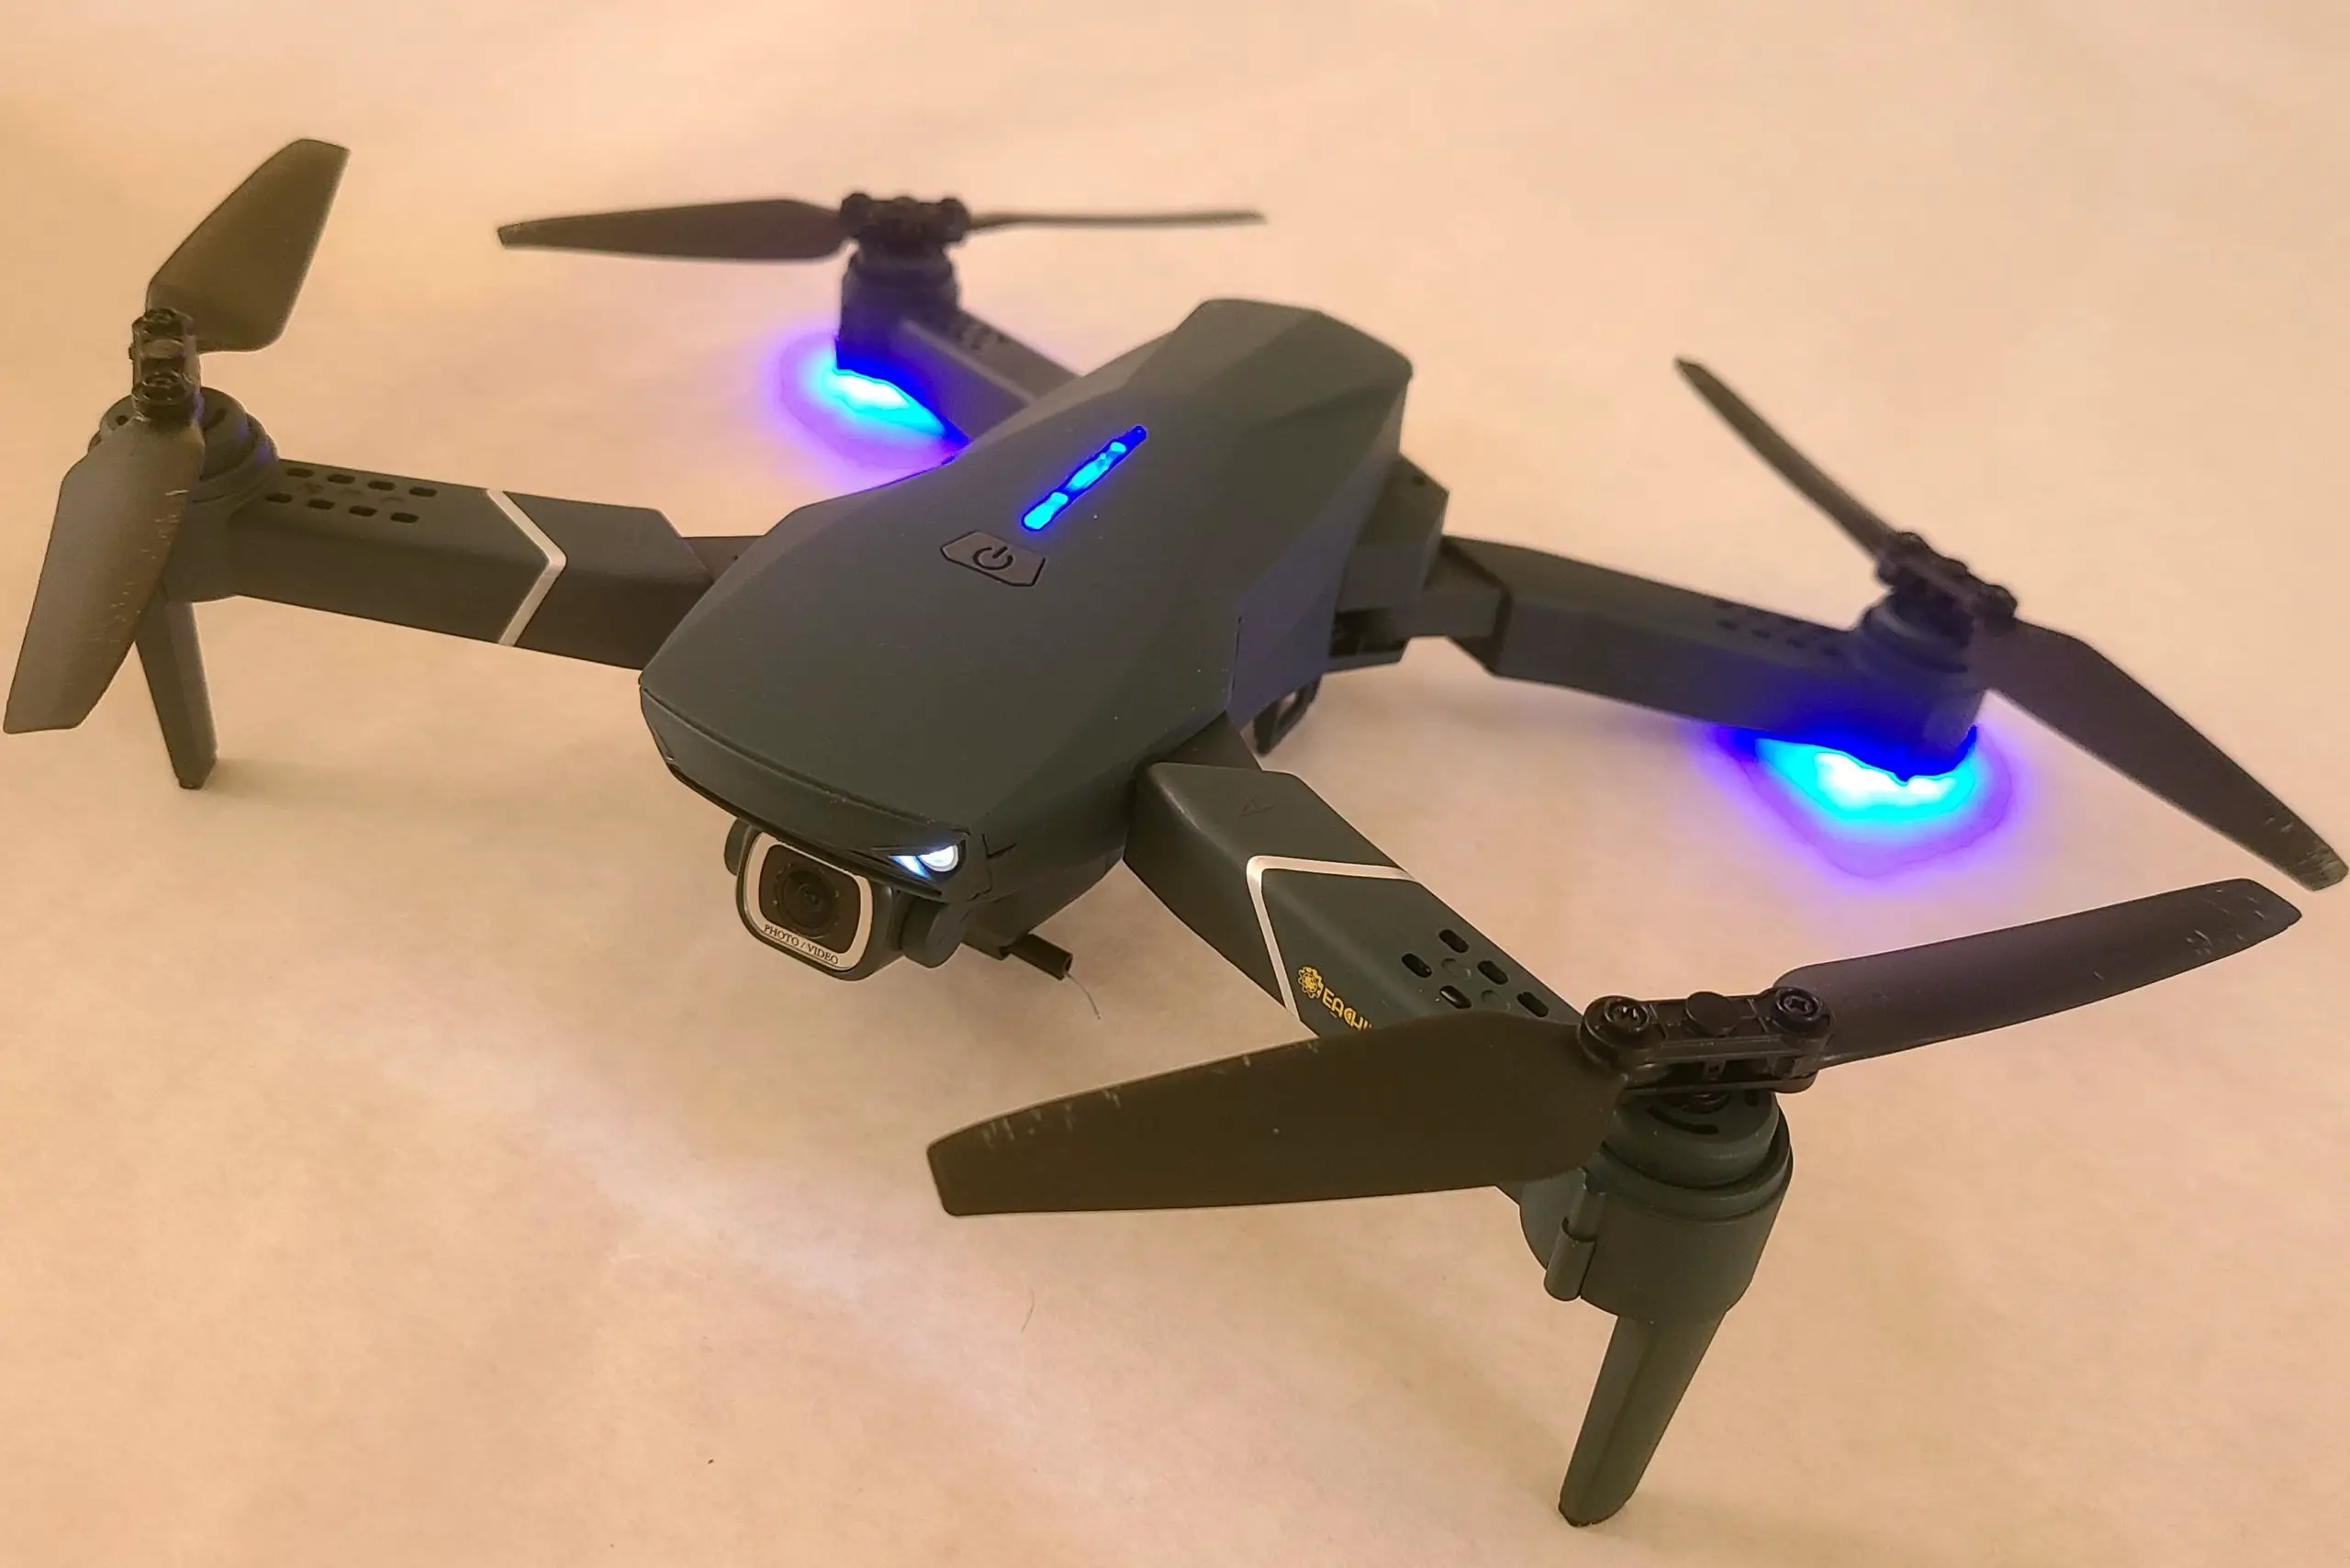 Eachine E520 Foldable Drone Review